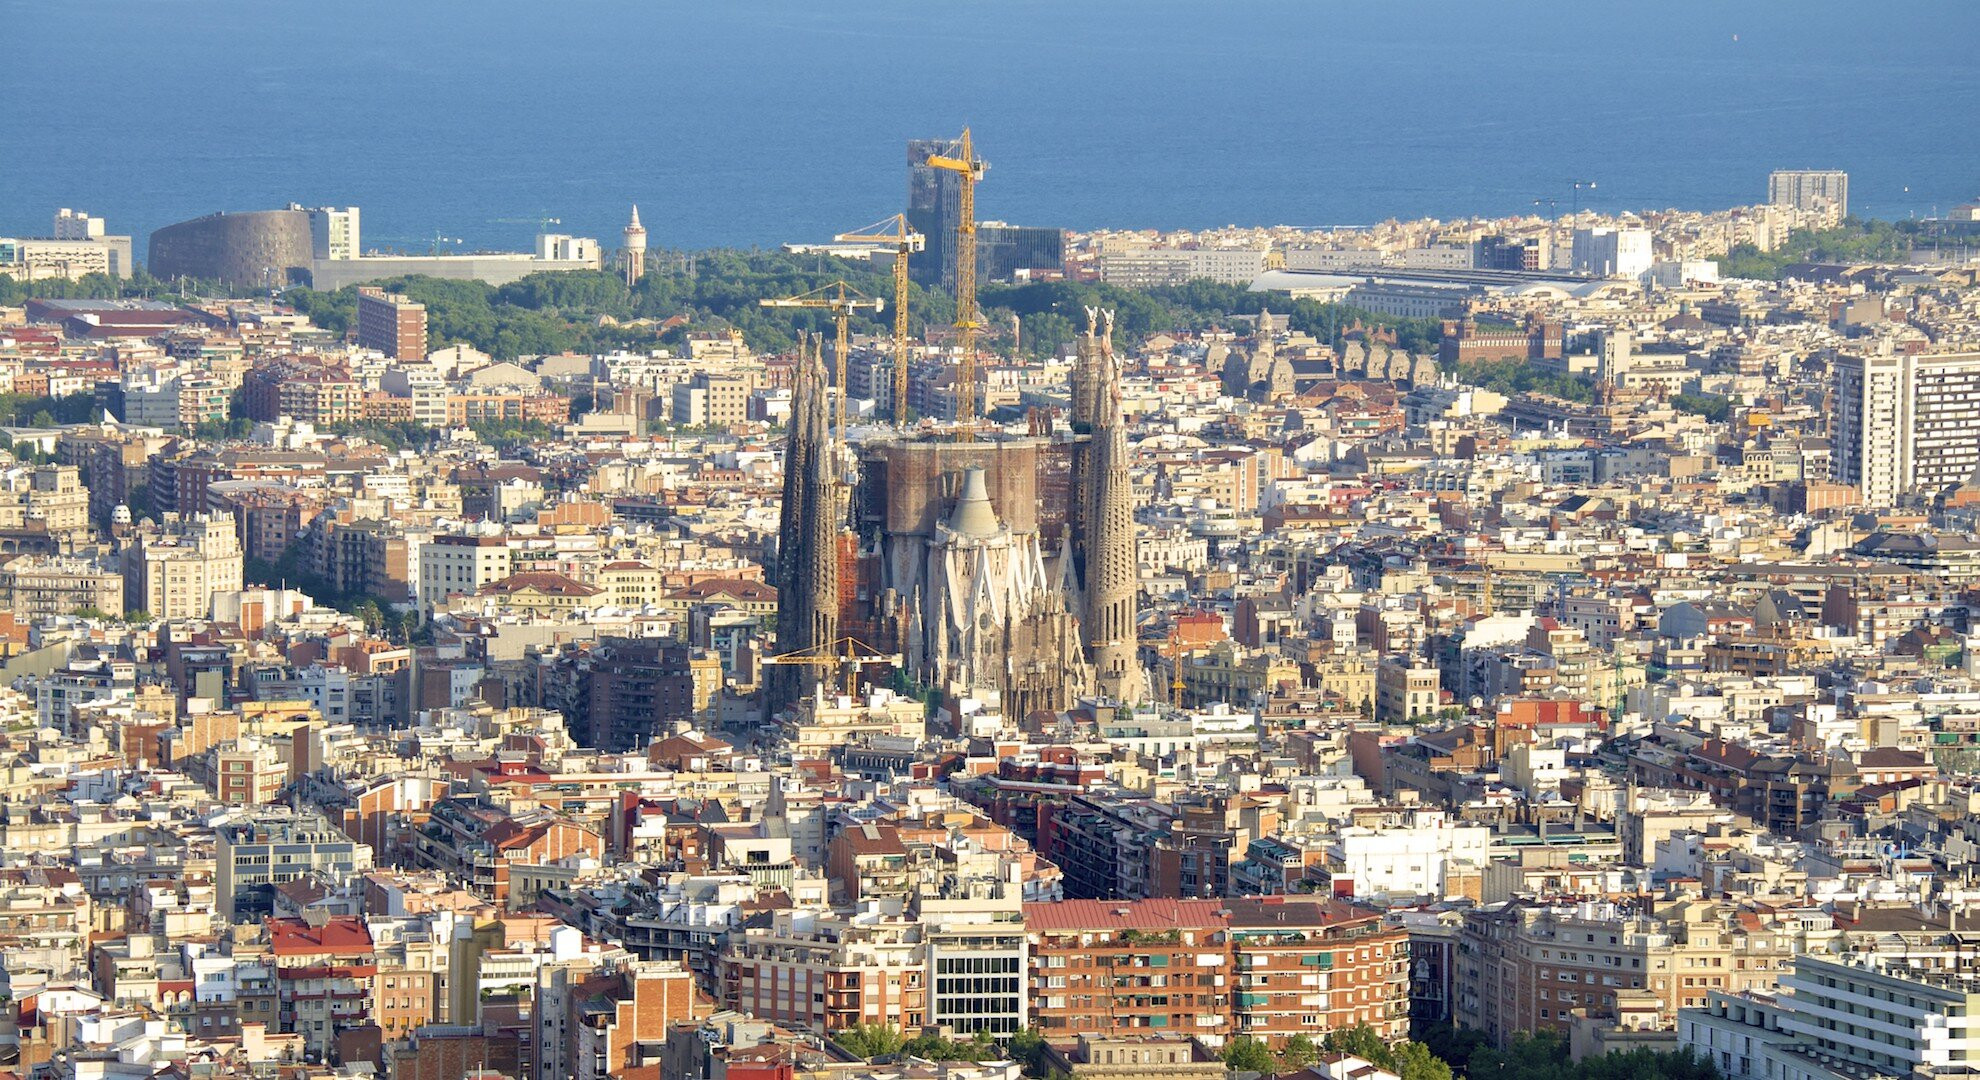 Barcelona Holidays 2021/2022